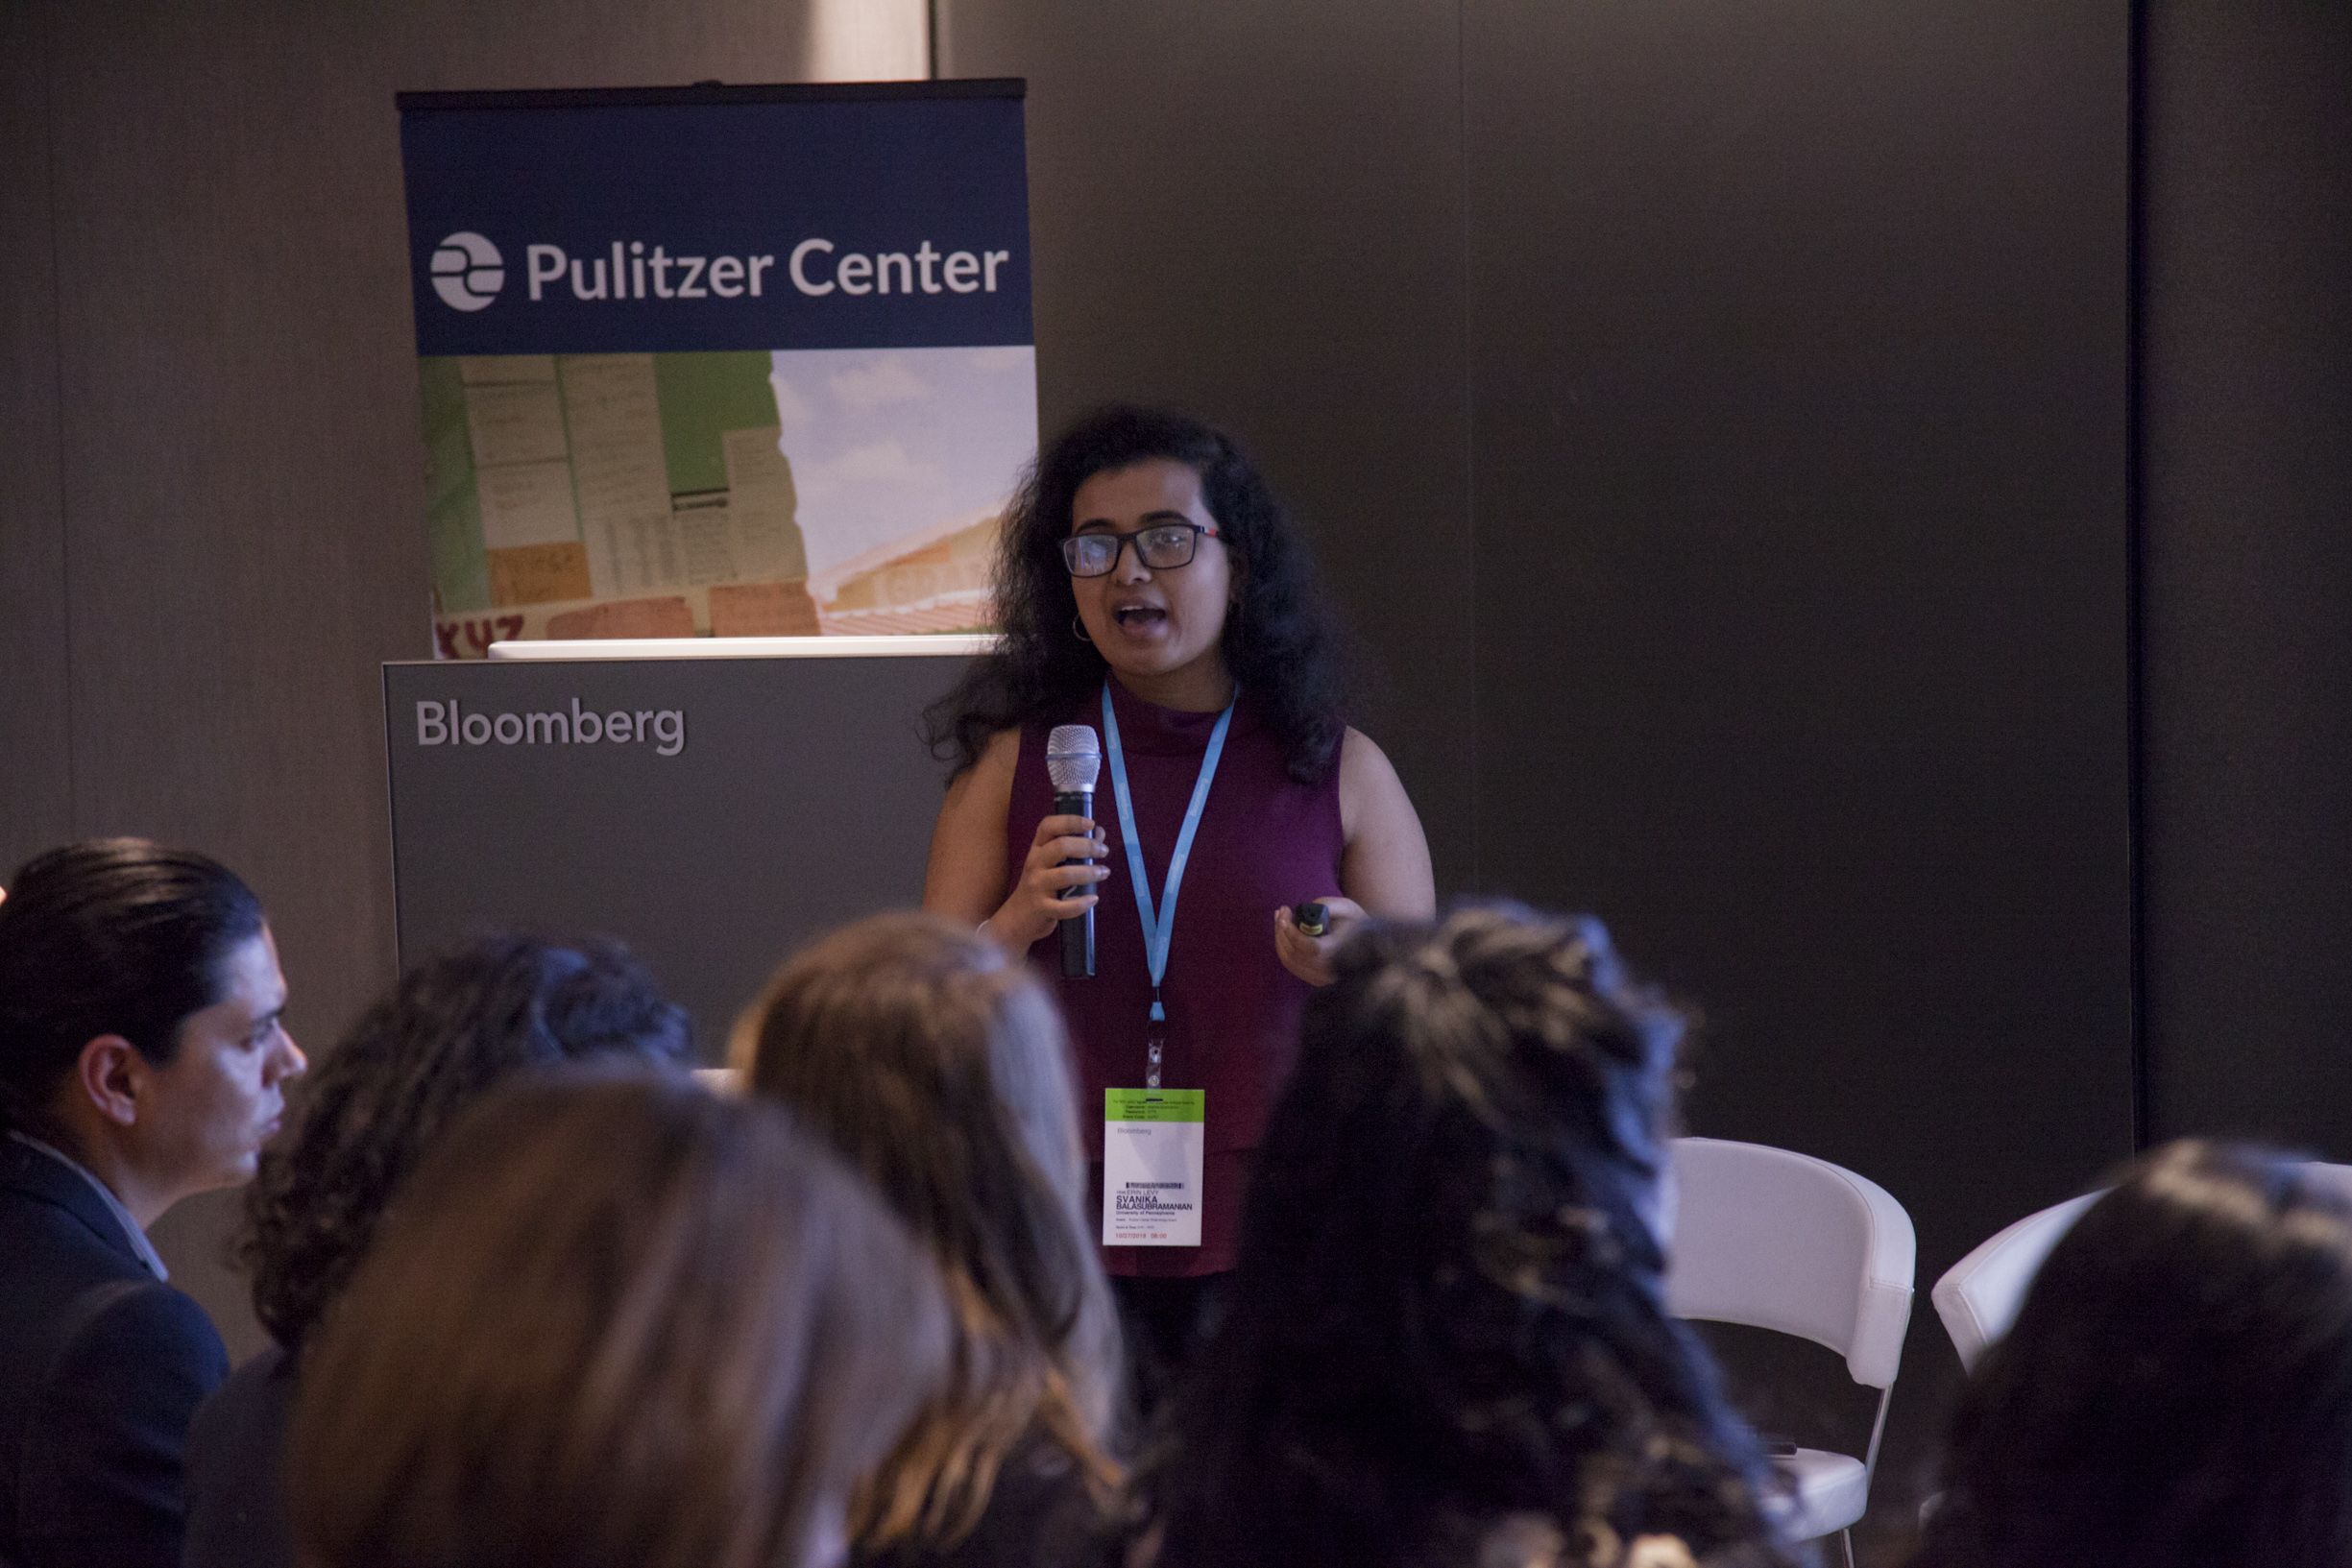 Svanika Balasubramanian (University of Pennsylvania) presents her global reporting project at 2018 Washington Weekend. Image by Jin Ding. United States, 2018.